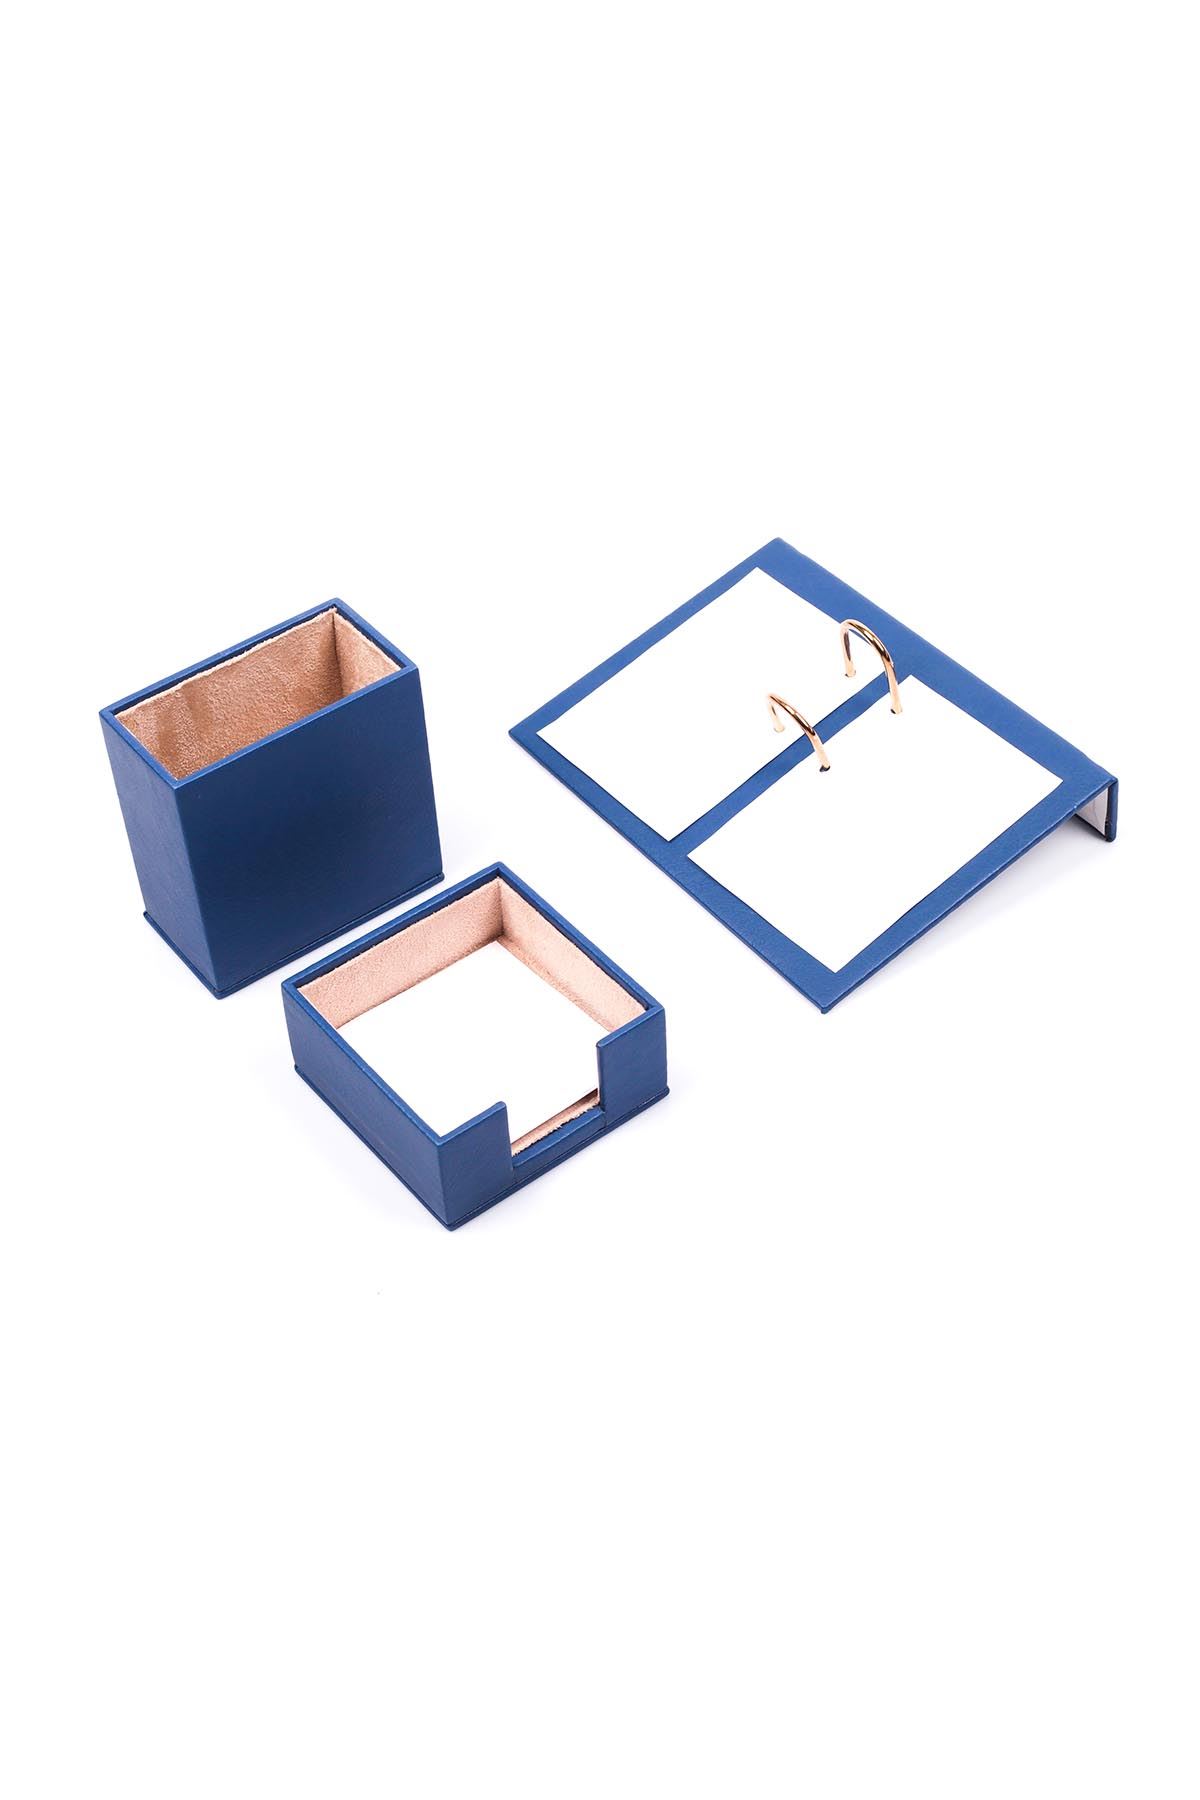 Leather Desk Accessories set of 3 Blue| Desk Set Accessories | Desktop Accessories | Desk Accessories | Desk Organizers